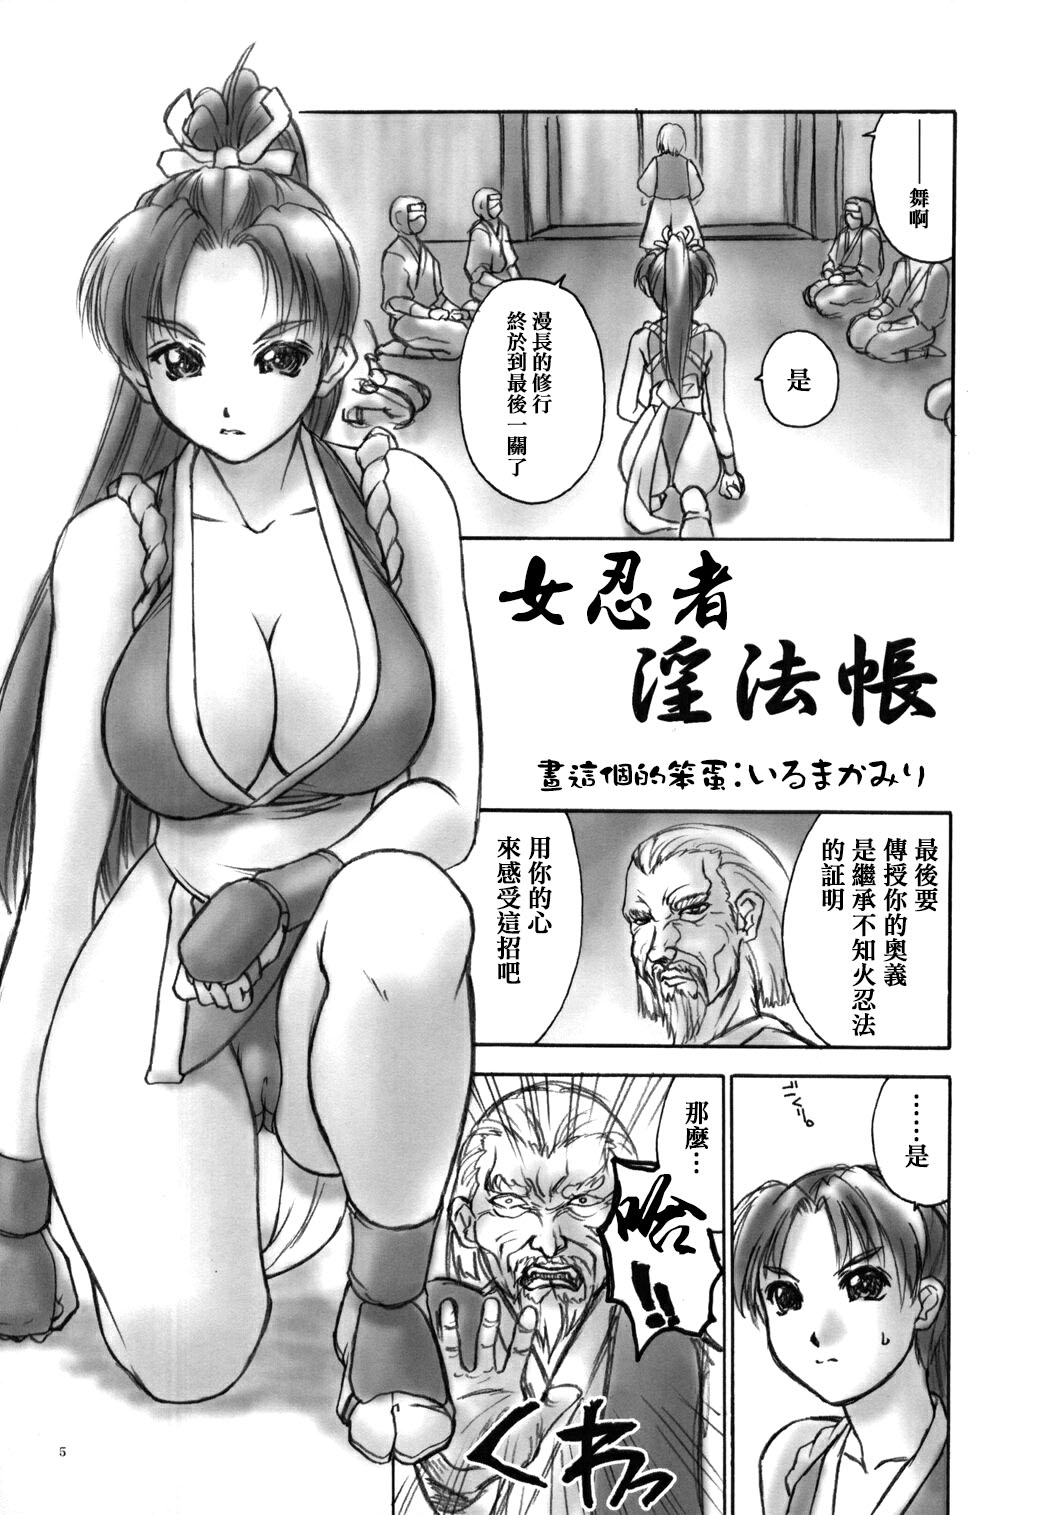 (CR32) [Hellabunna (Iruma Kamiri, Mibu Natsuki)] Fighting 6 Button Pad (King of Fighters) [Chinese] [日祈漢化] (Cレヴォ32) [へらぶな (いるまかみり、みぶなつき)] ファイティング6ボタンパッド (ザ・キング・オブ・ファイターズ、対局麻雀ネットでロン!) [中国翻訳]